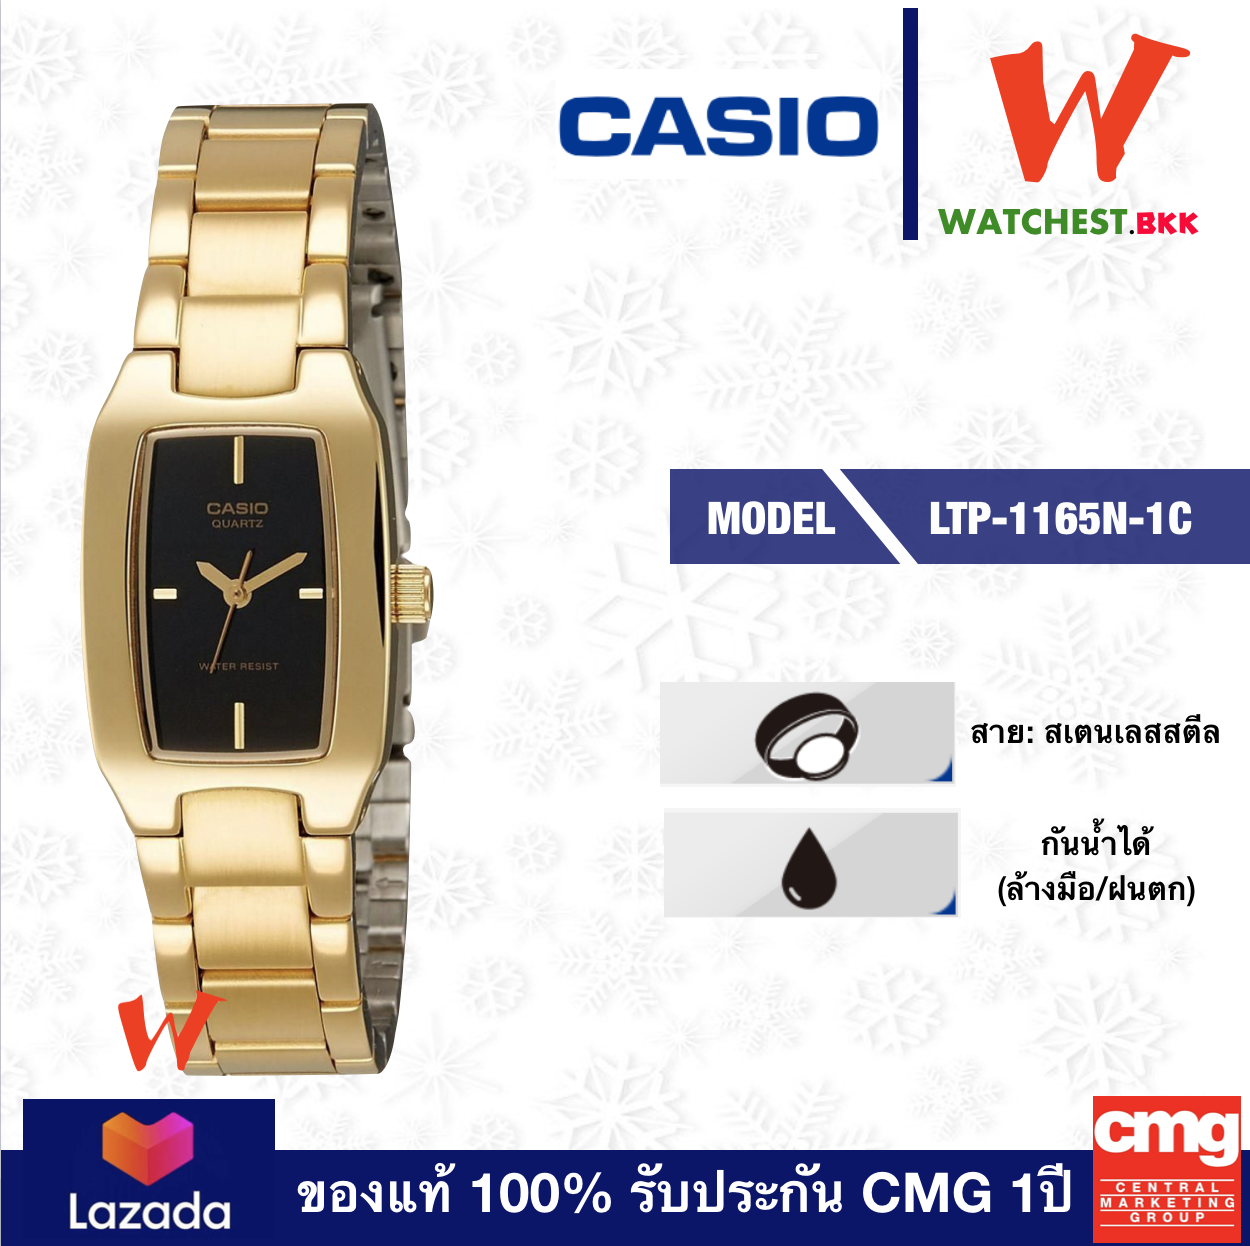 casio นาฬิกาผู้หญิง สายสเตนเลสทอง รุ่น LTP-1165N-1C, คาสิโอ้ LTP1165, LTP-1165  สายเหล็ก ตัวล็อกบานพับ (watchestbkk คาสิโอ แท้ ของแท้100% ประกัน CMG)